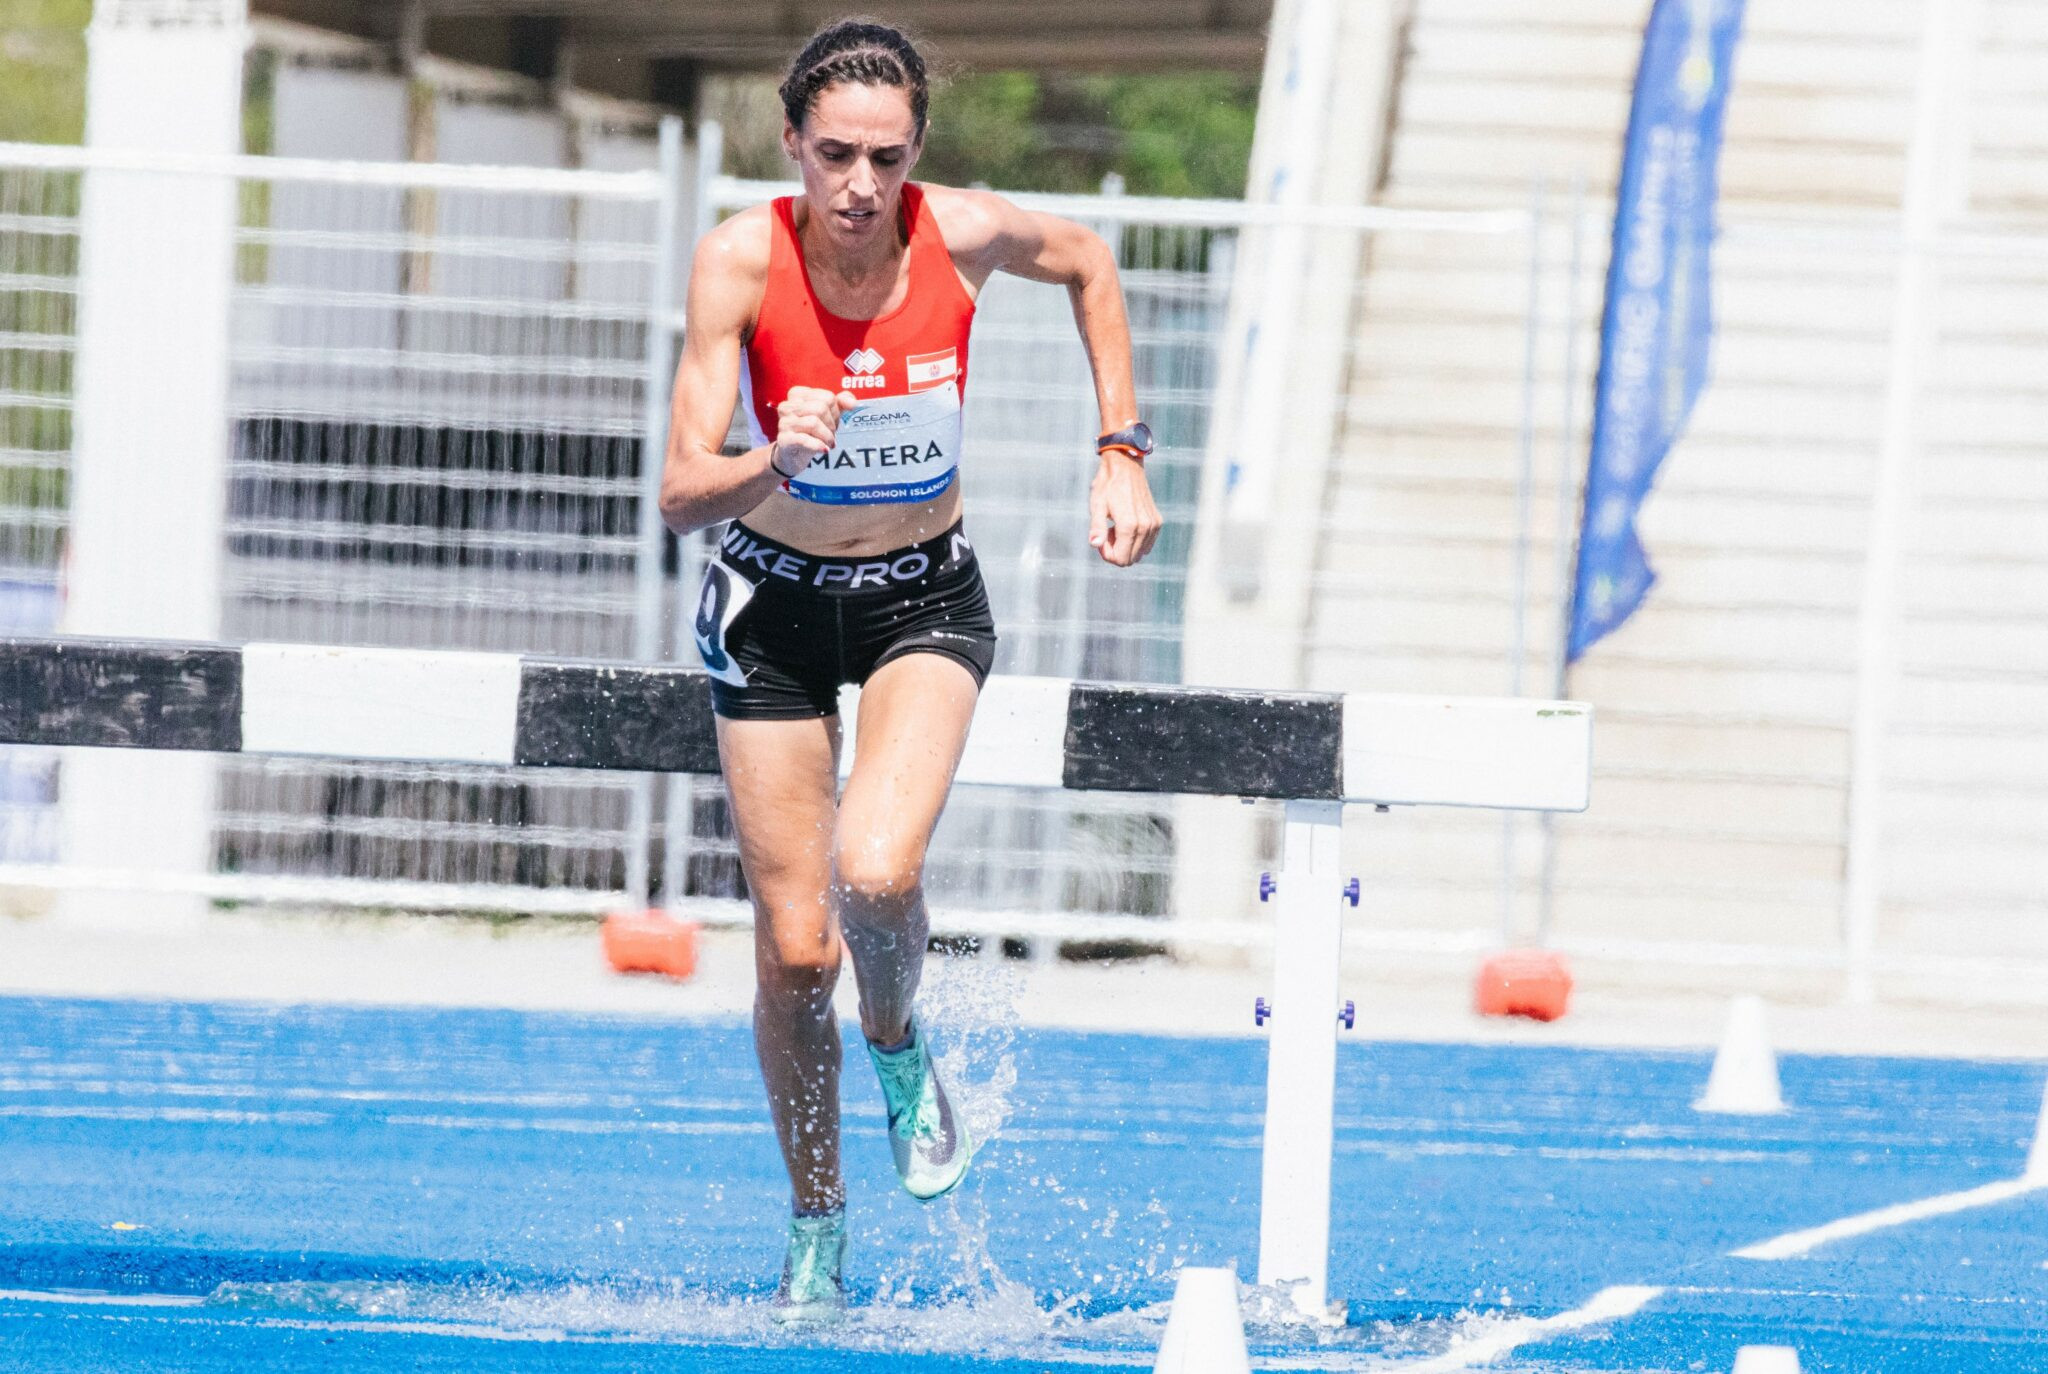 Tahiti’s Amandine Matera comfortably wins women’s 3000m steeplechase  -  Photos: Danzo Kakadi, Pacific Games News Service
